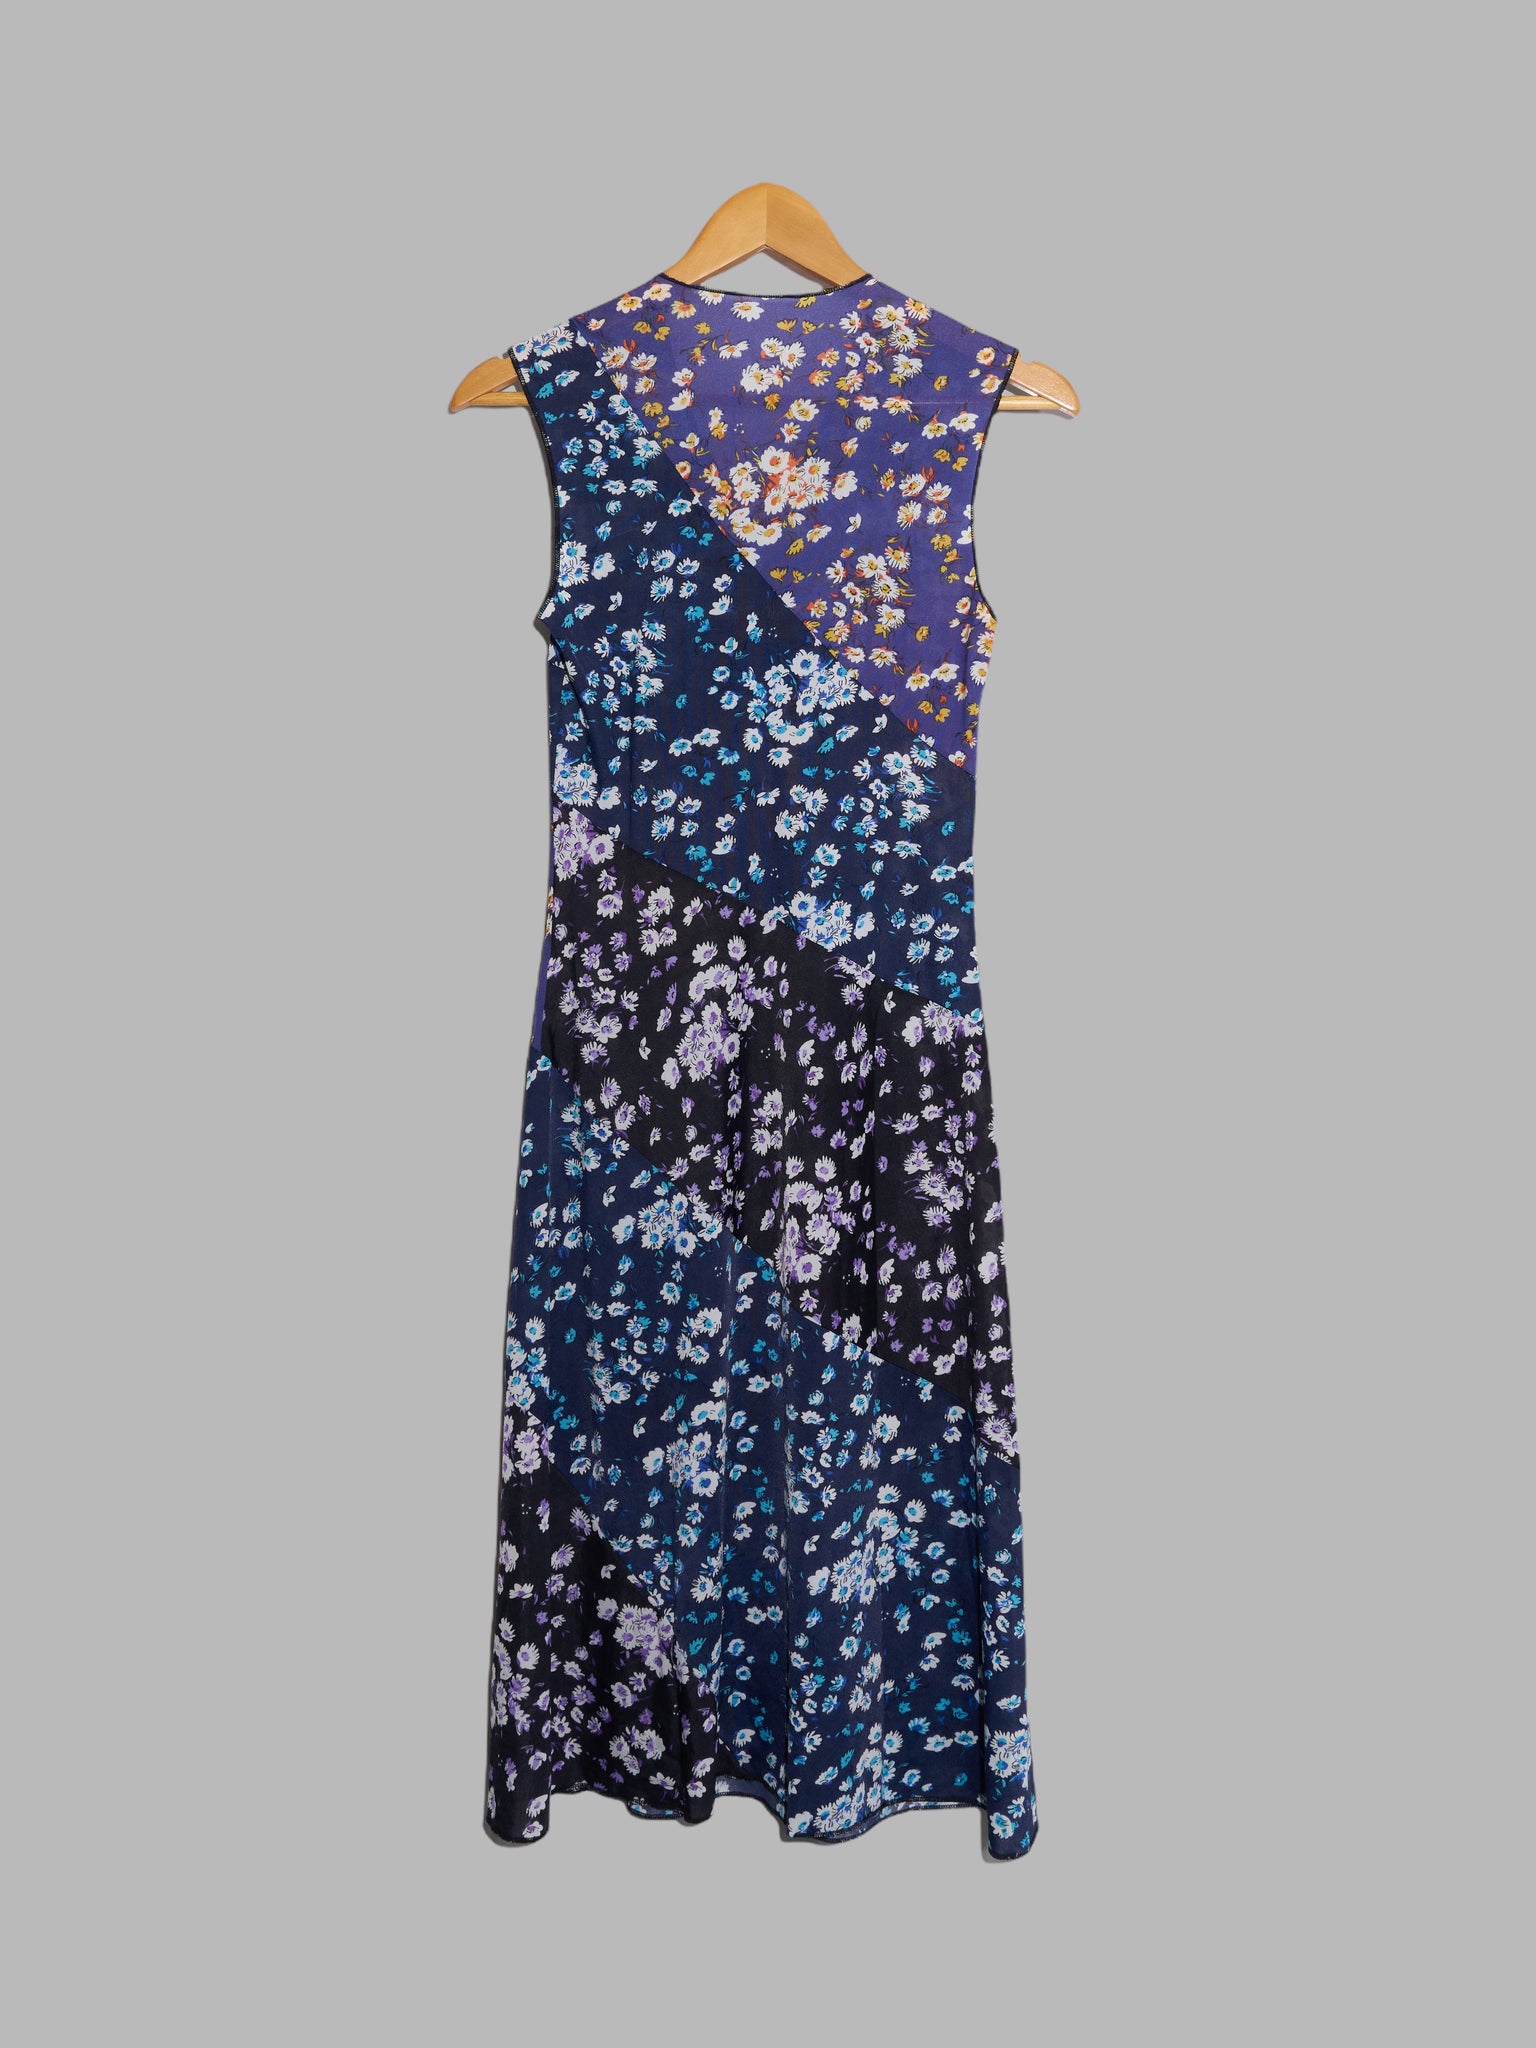 Jean Colonna blue and purple patchwork floral print v neck sleeveless dress